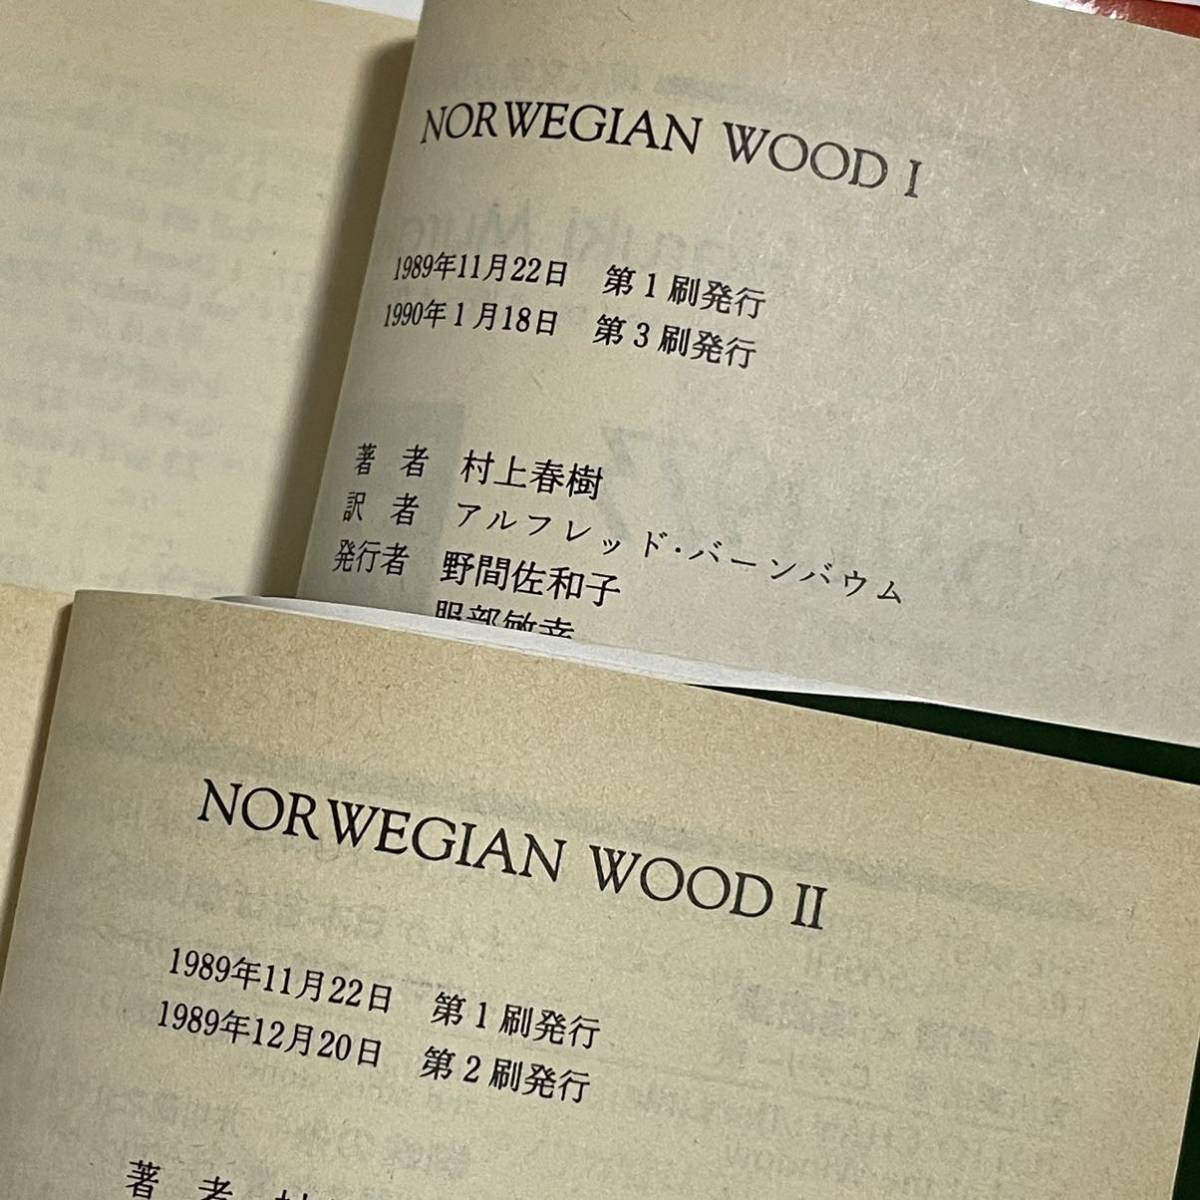 .. фирма английский язык библиотека Norwegian Woodnoru way. лес 1*2 шт комплект Murakami Haruki Haruki Murakami